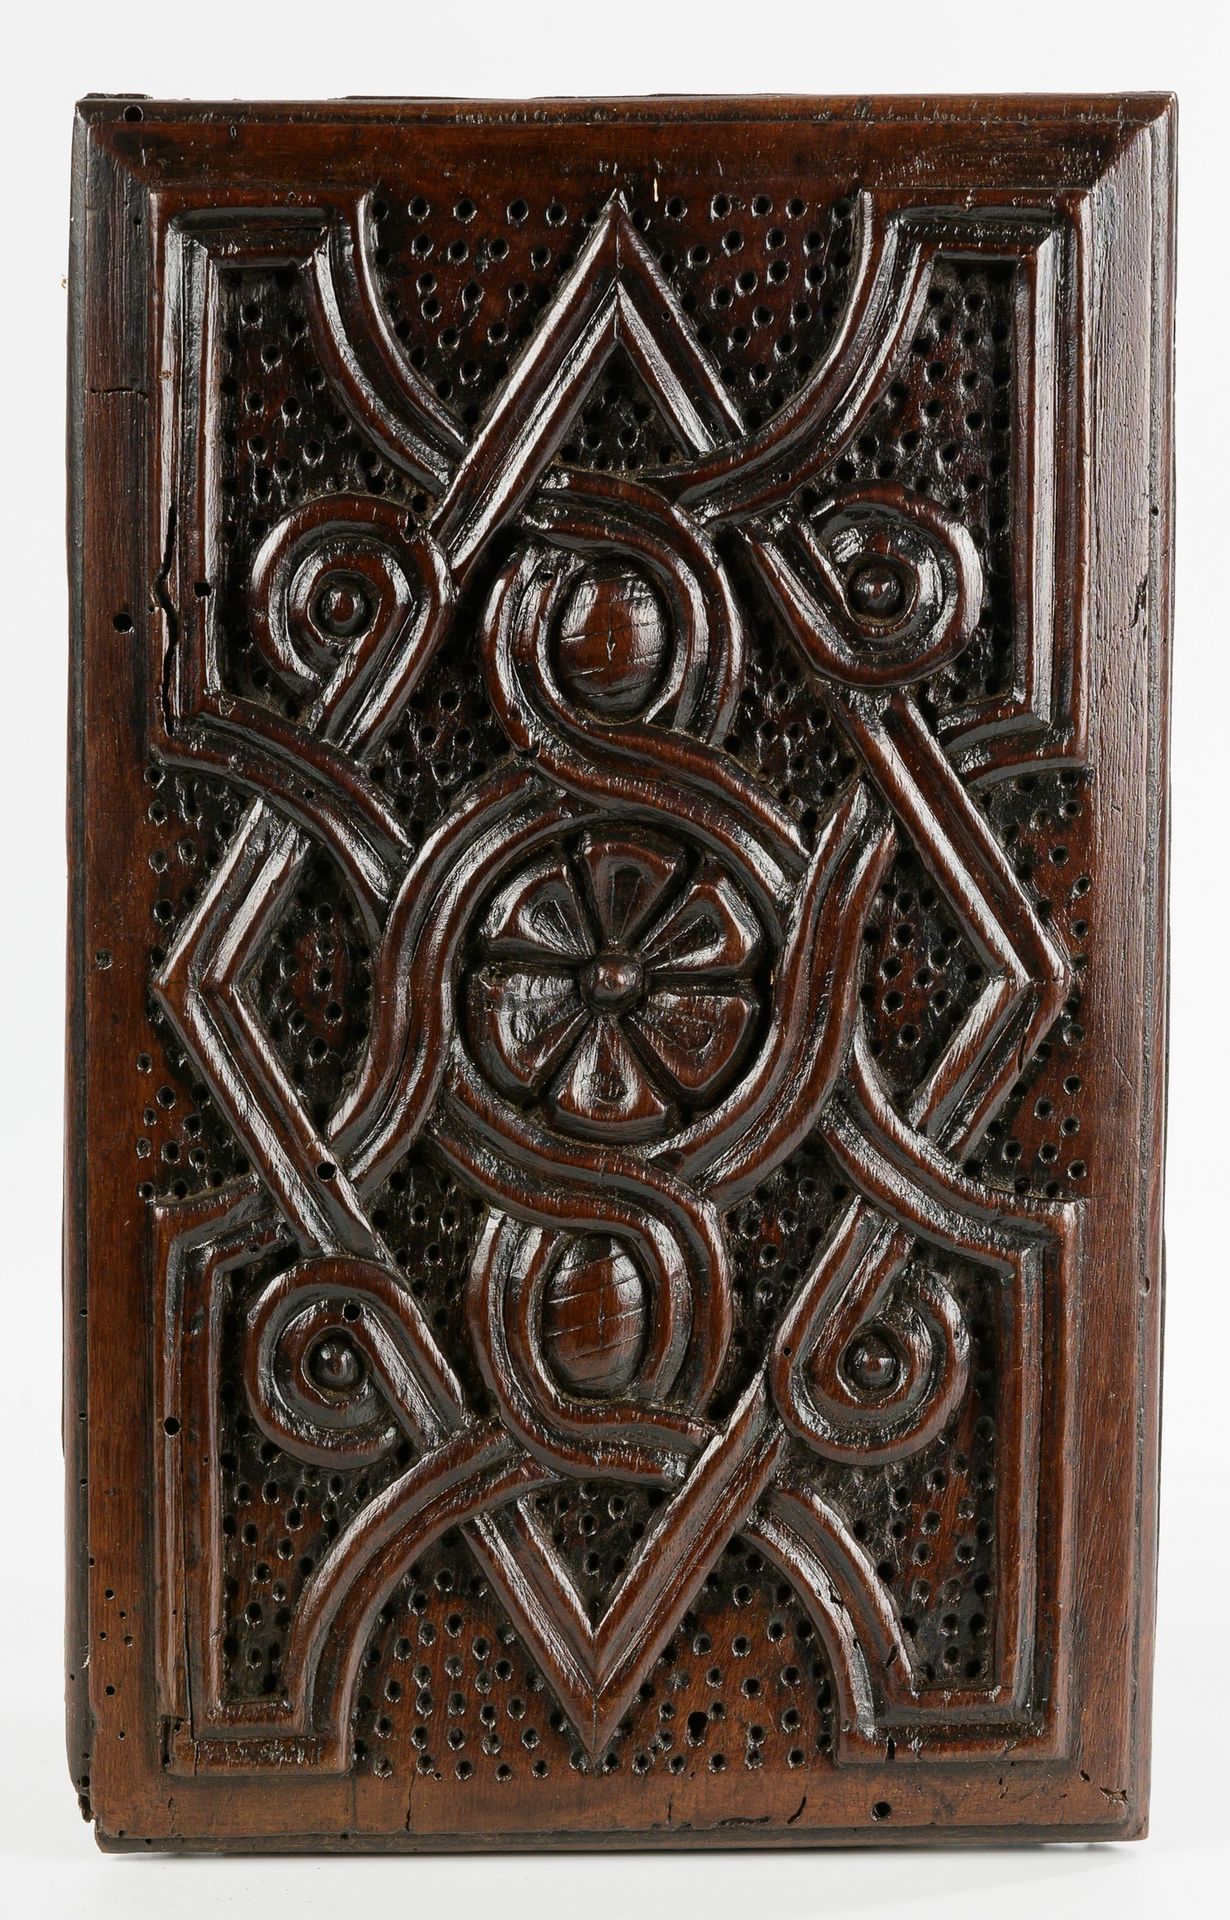 Null Panel del maletero

Madera.

Siglo XVI

28 x 18 cm